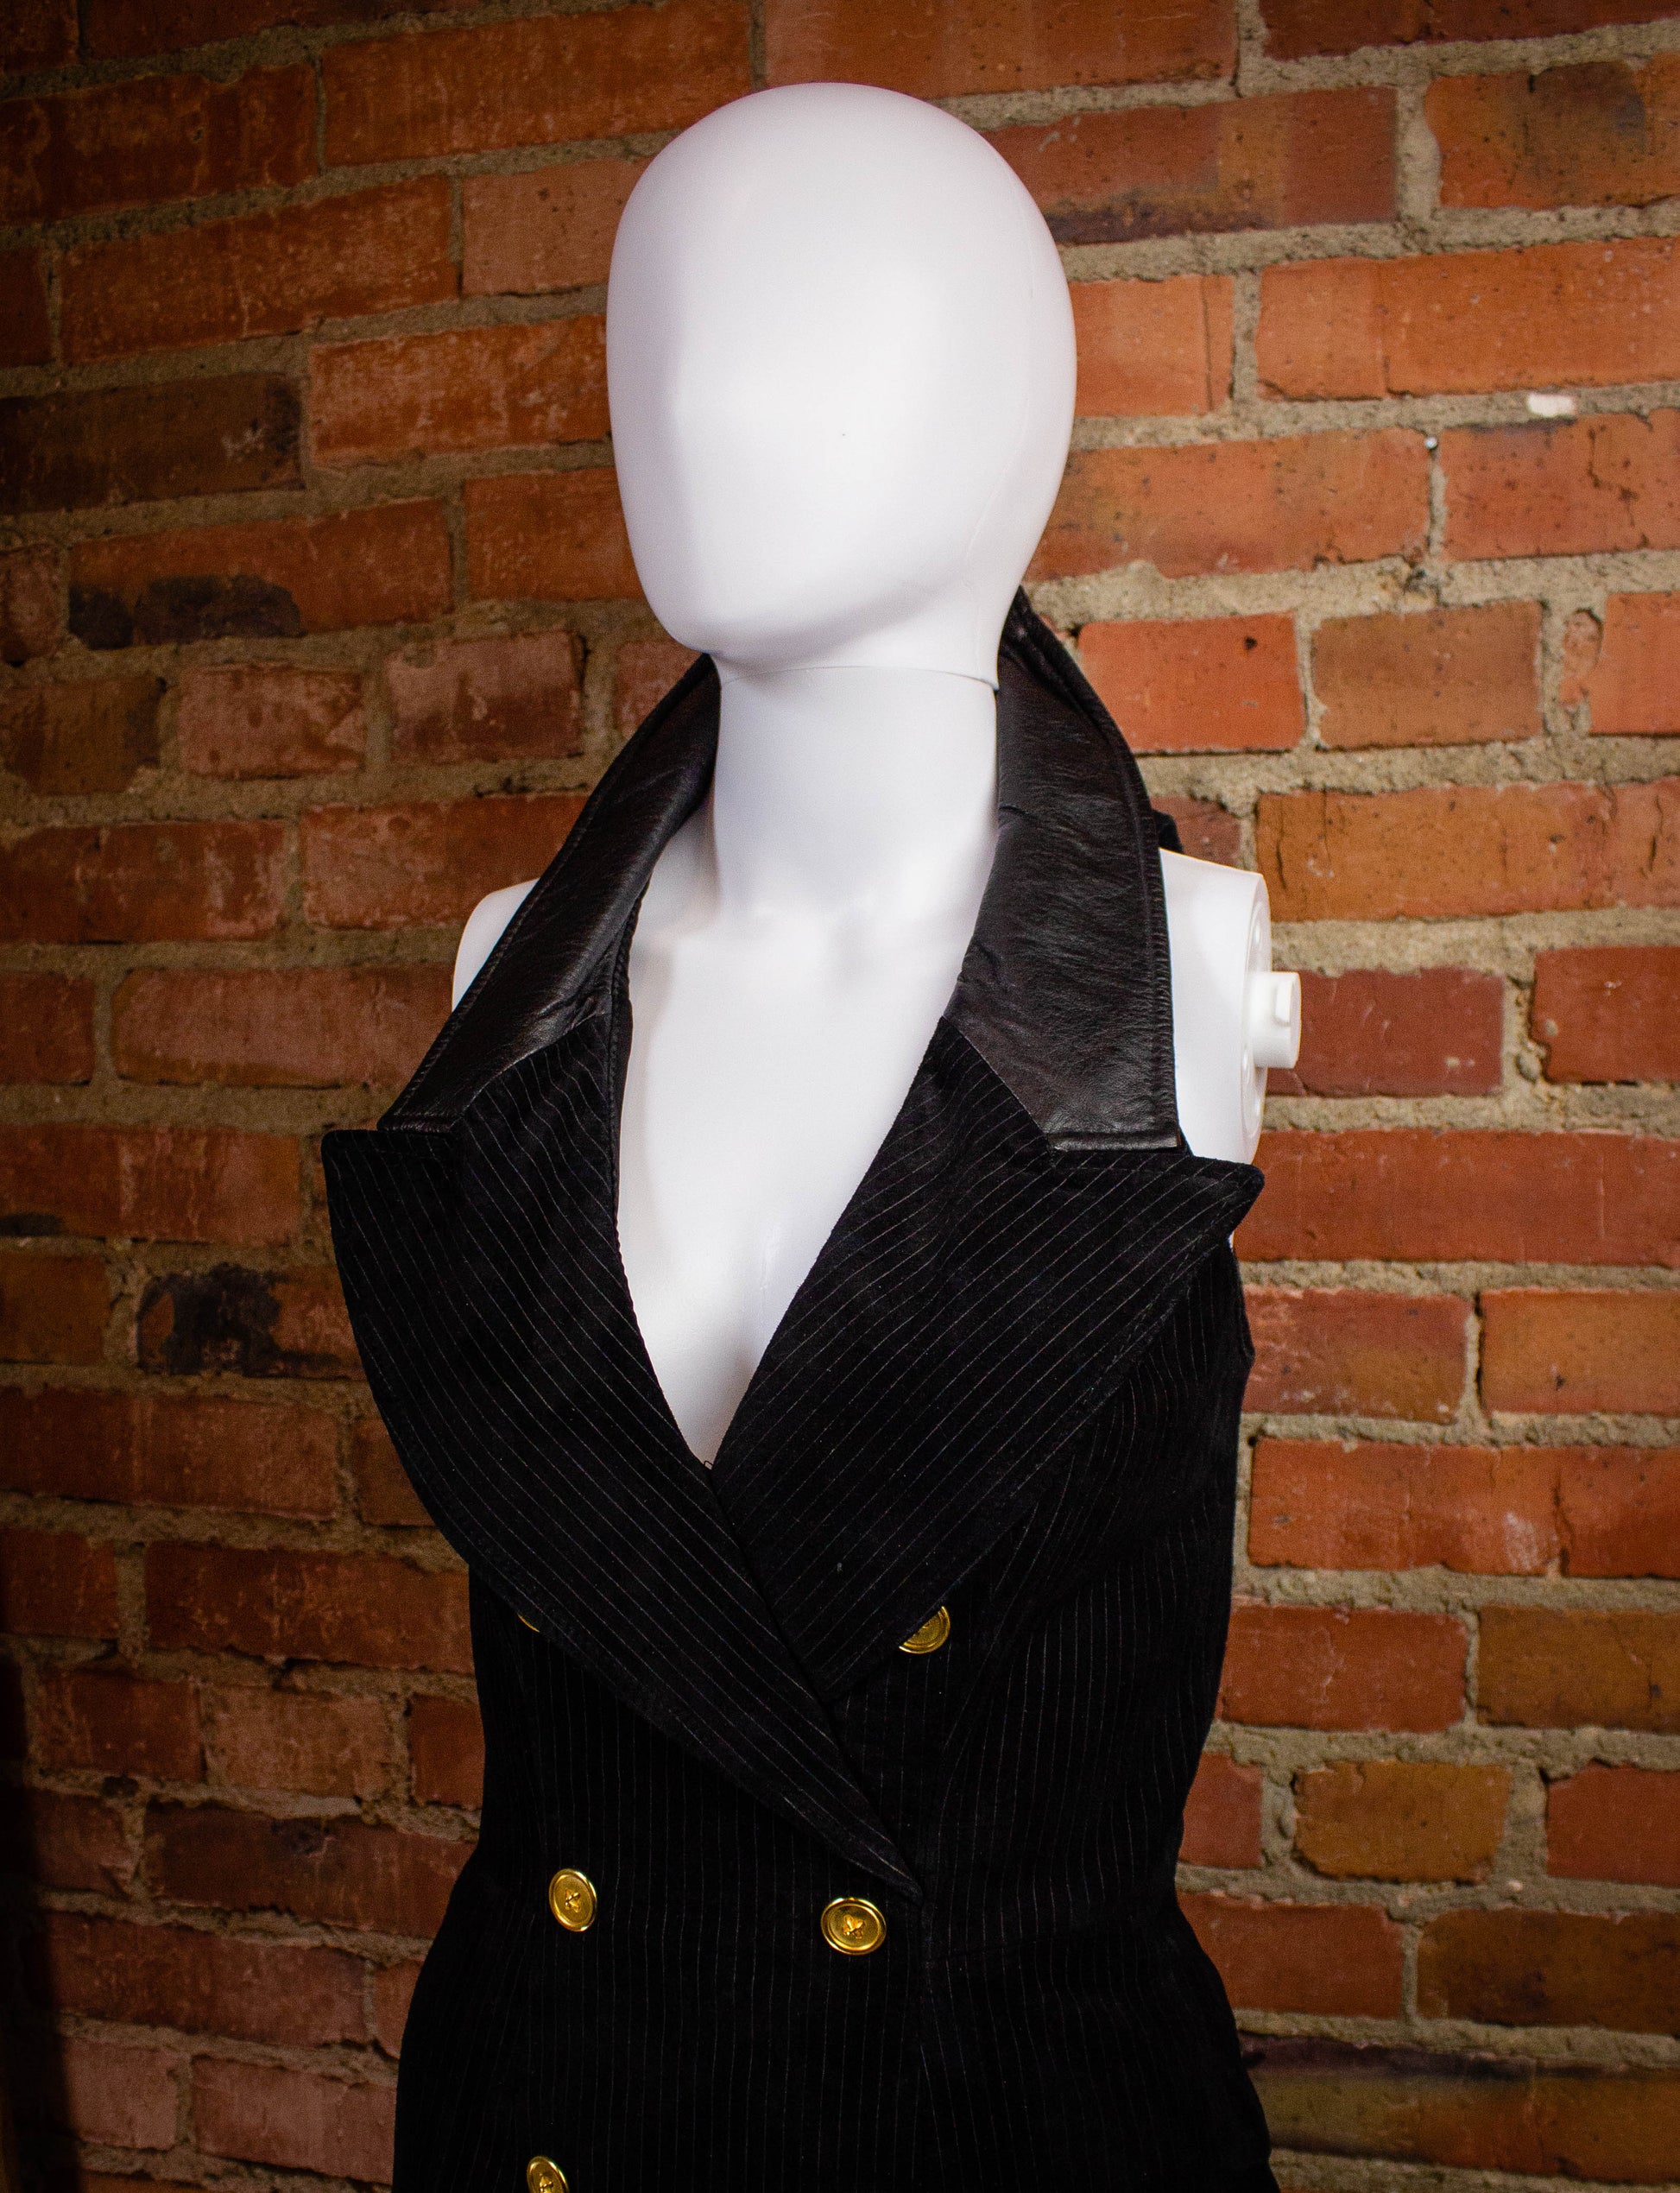 Vintage North Beach Black Leather Pinstripe Halter Leather Dress 80s XS